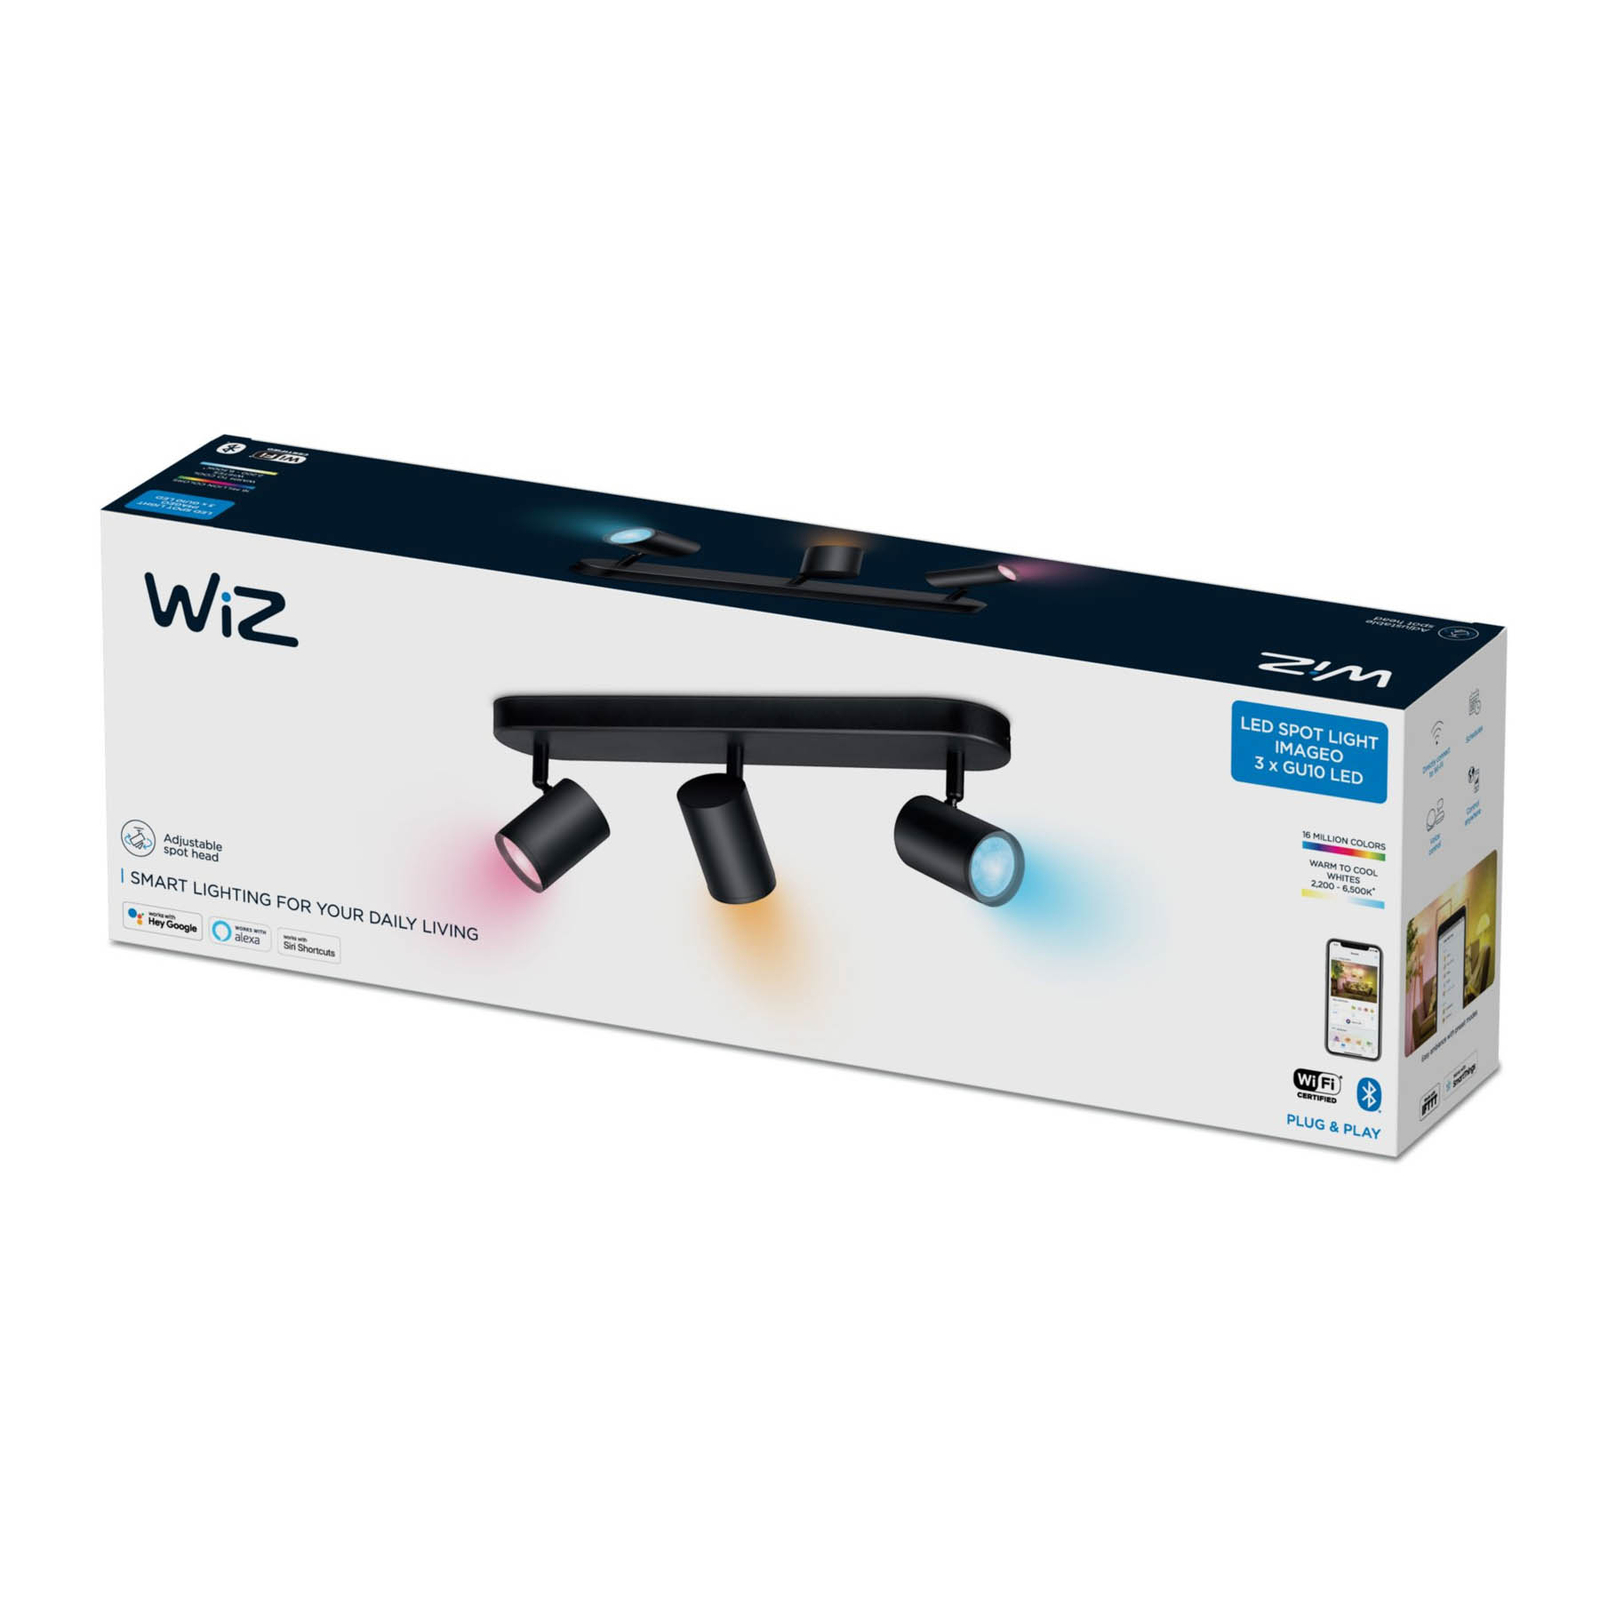 Projetor WiZ Imageo LED 3 lâmpadas RGB, preto